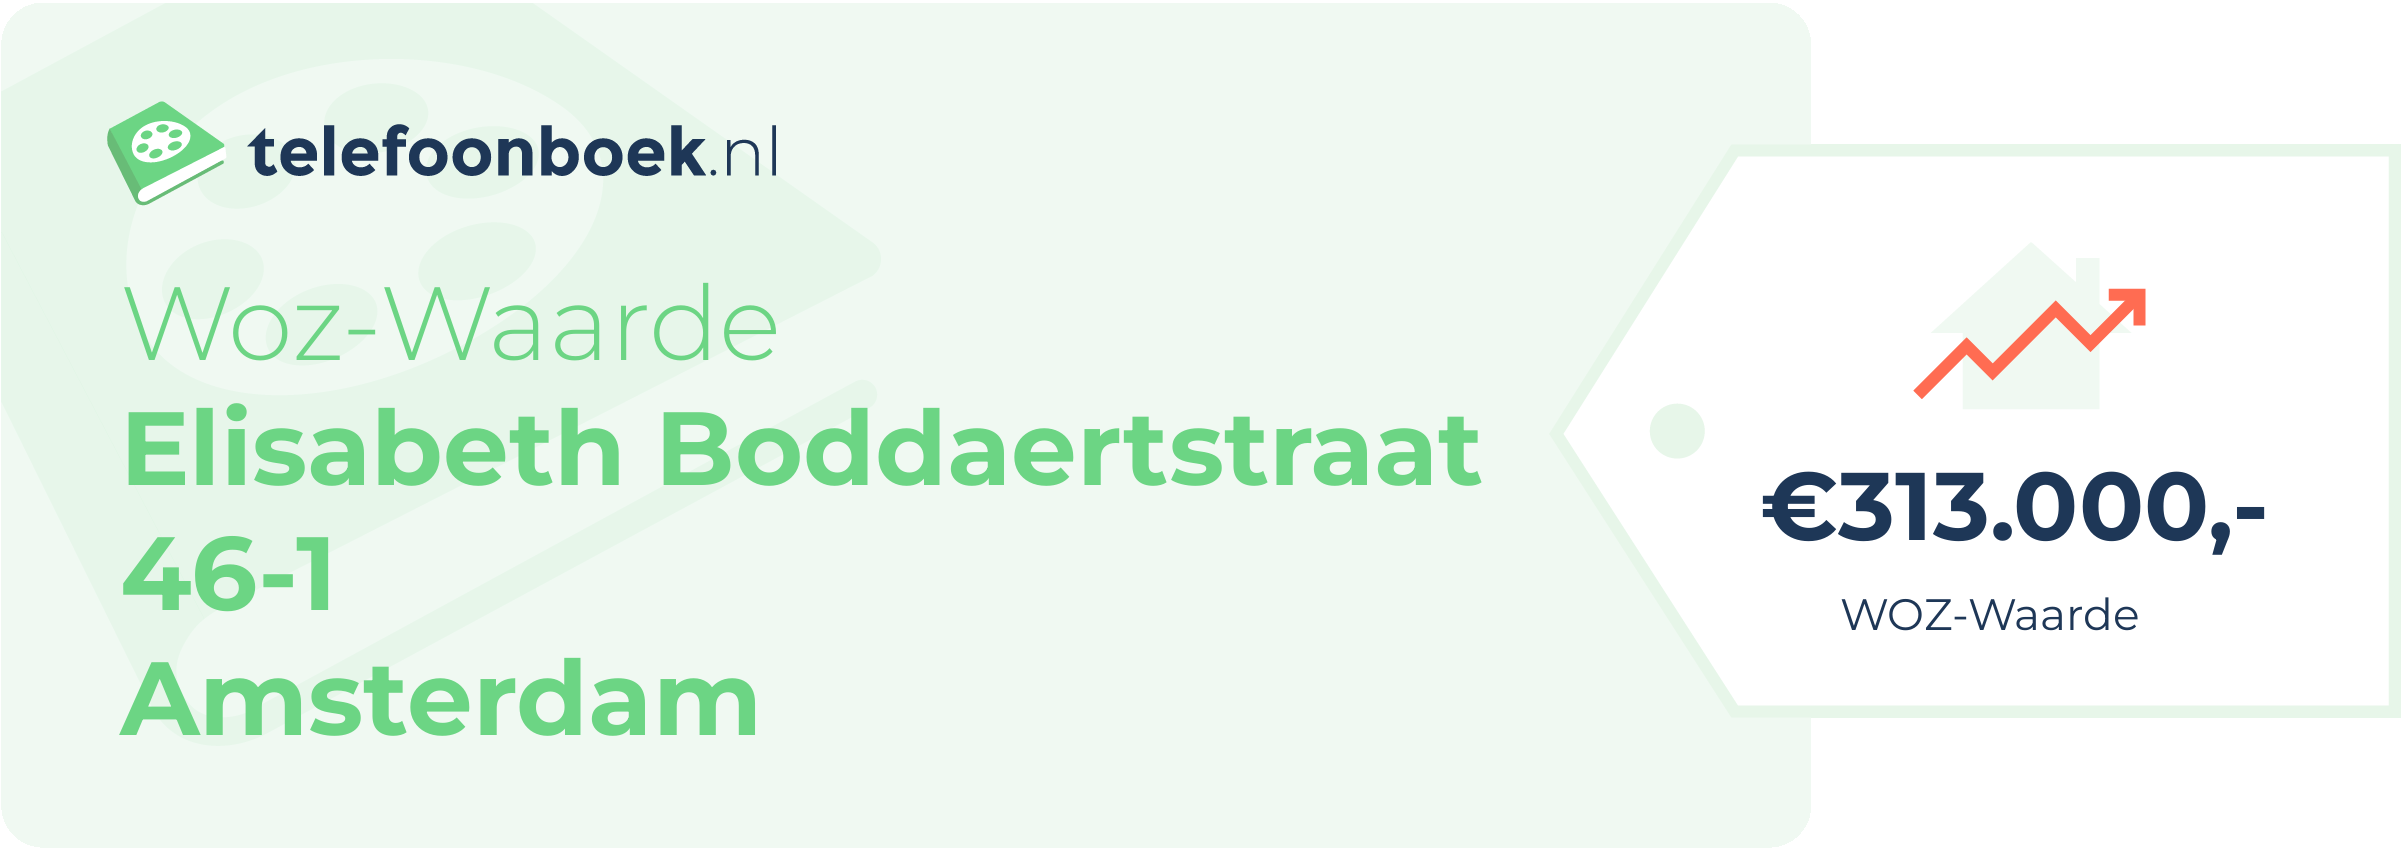 WOZ-waarde Elisabeth Boddaertstraat 46-1 Amsterdam